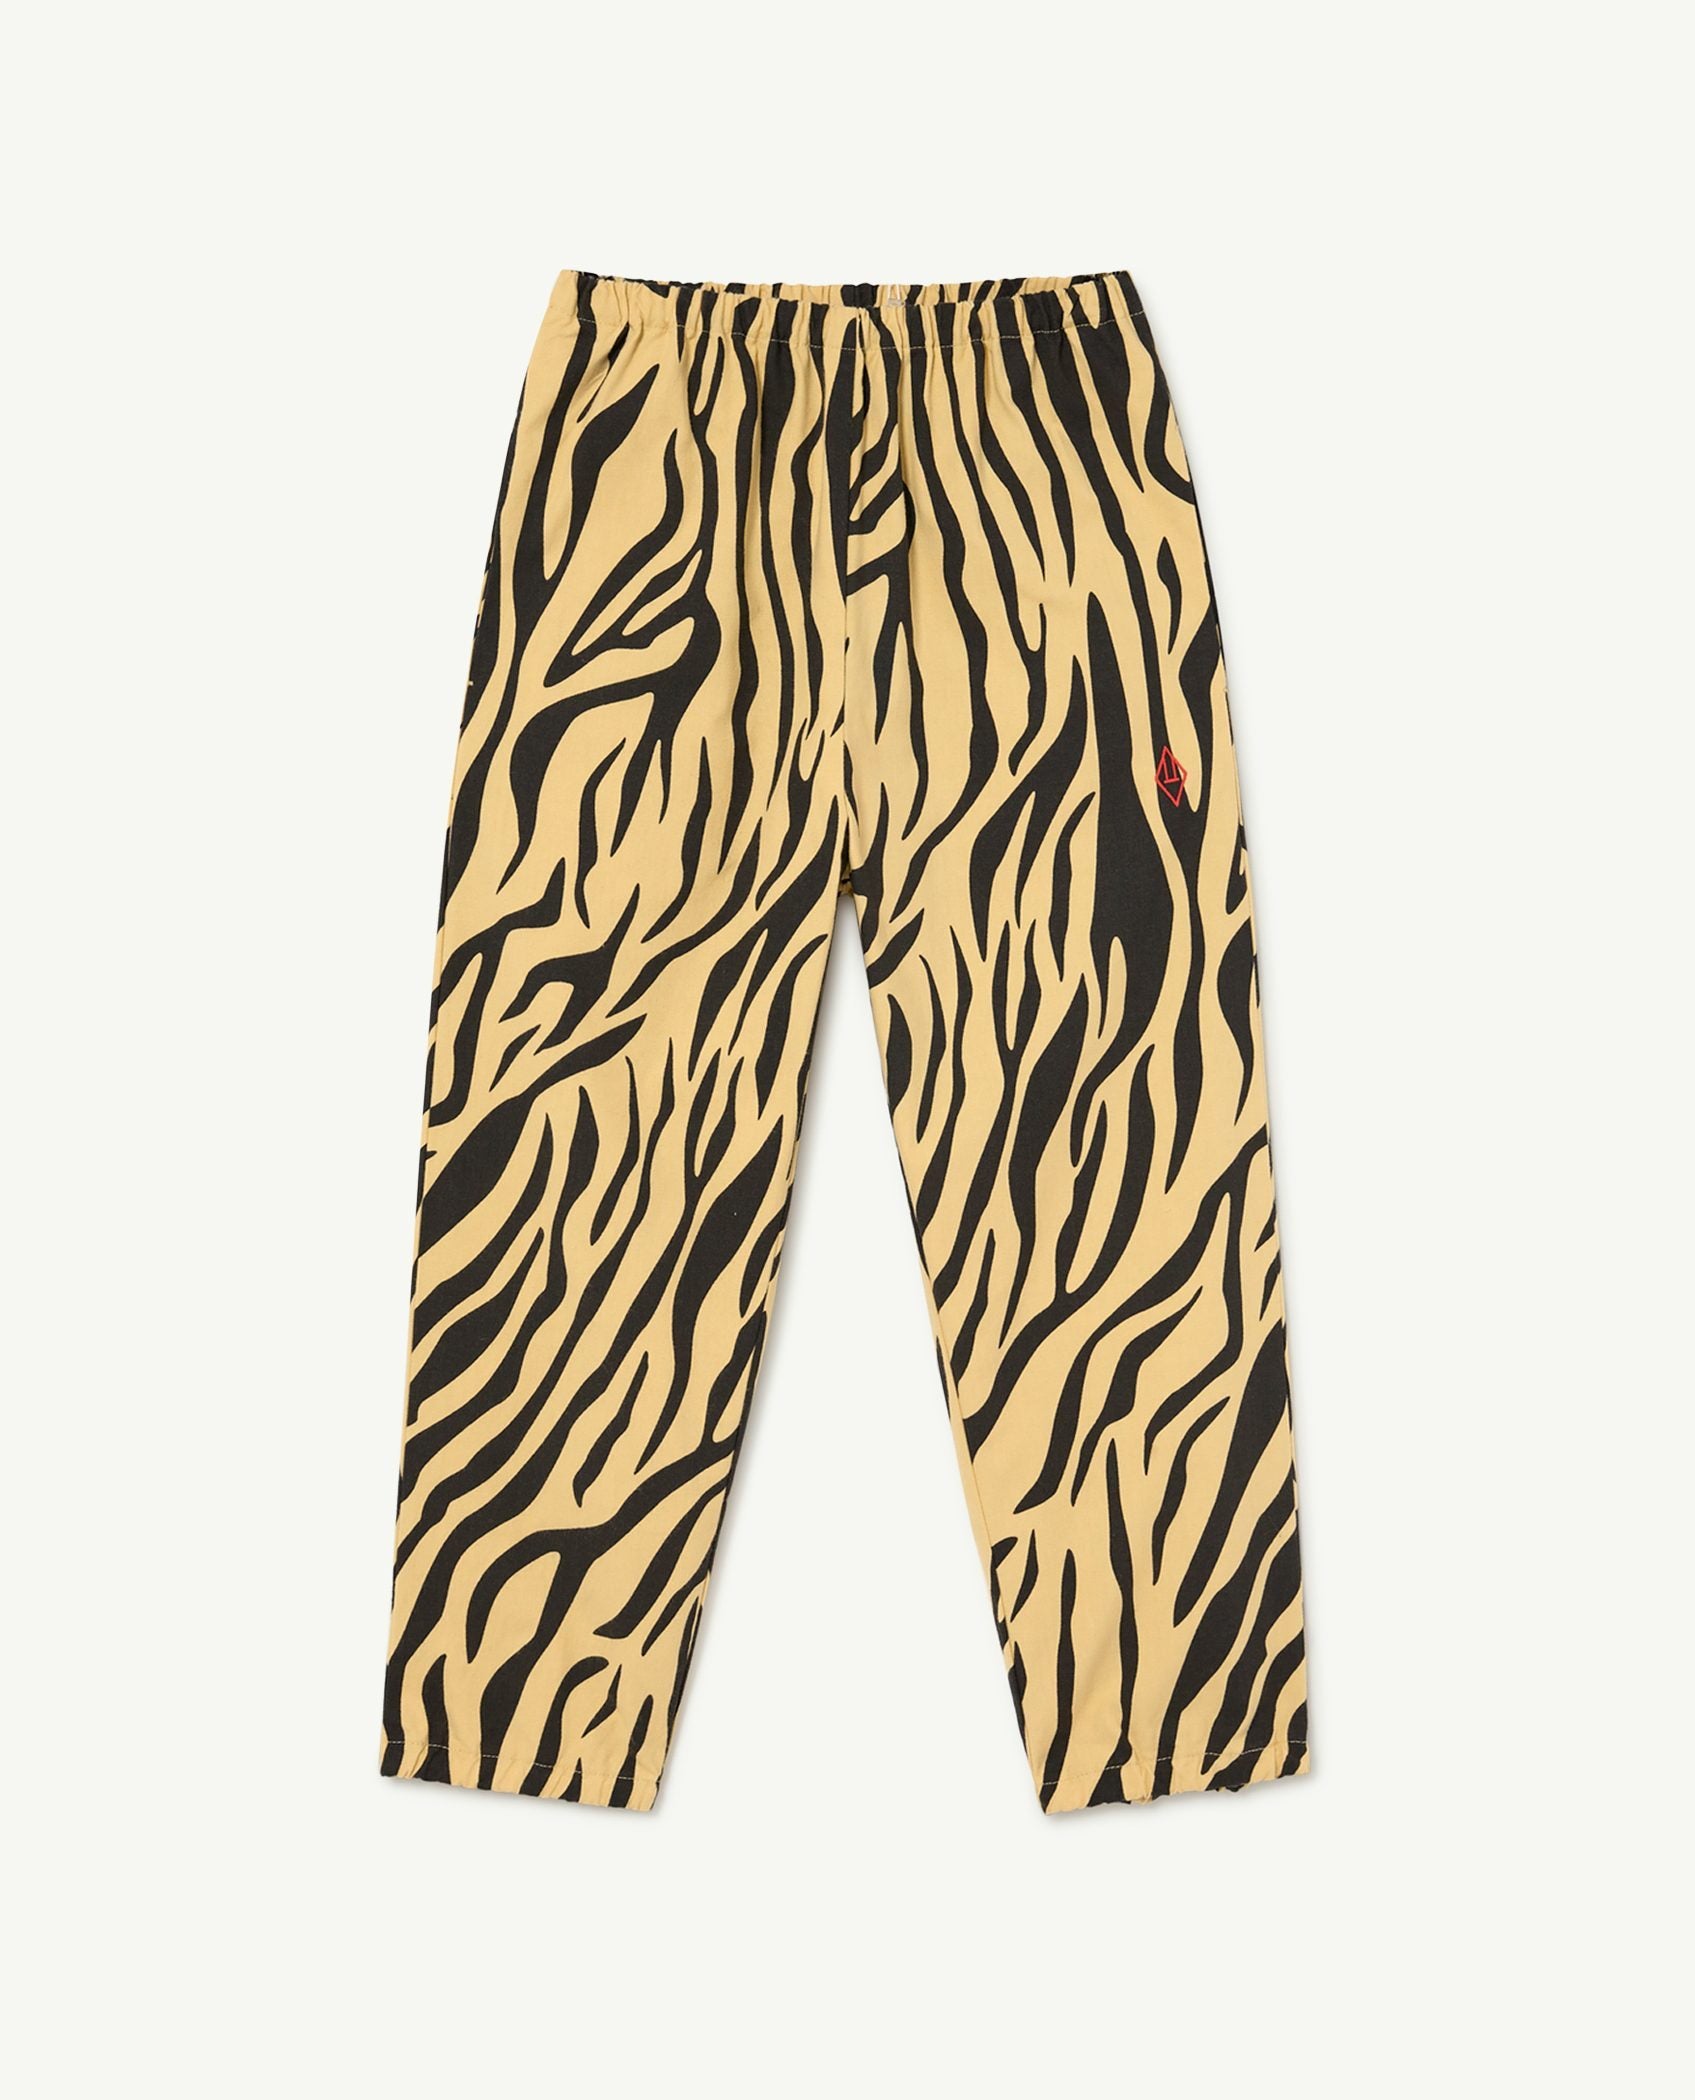 Yellow Zebra Elephant Pants PRODUCT FRONT